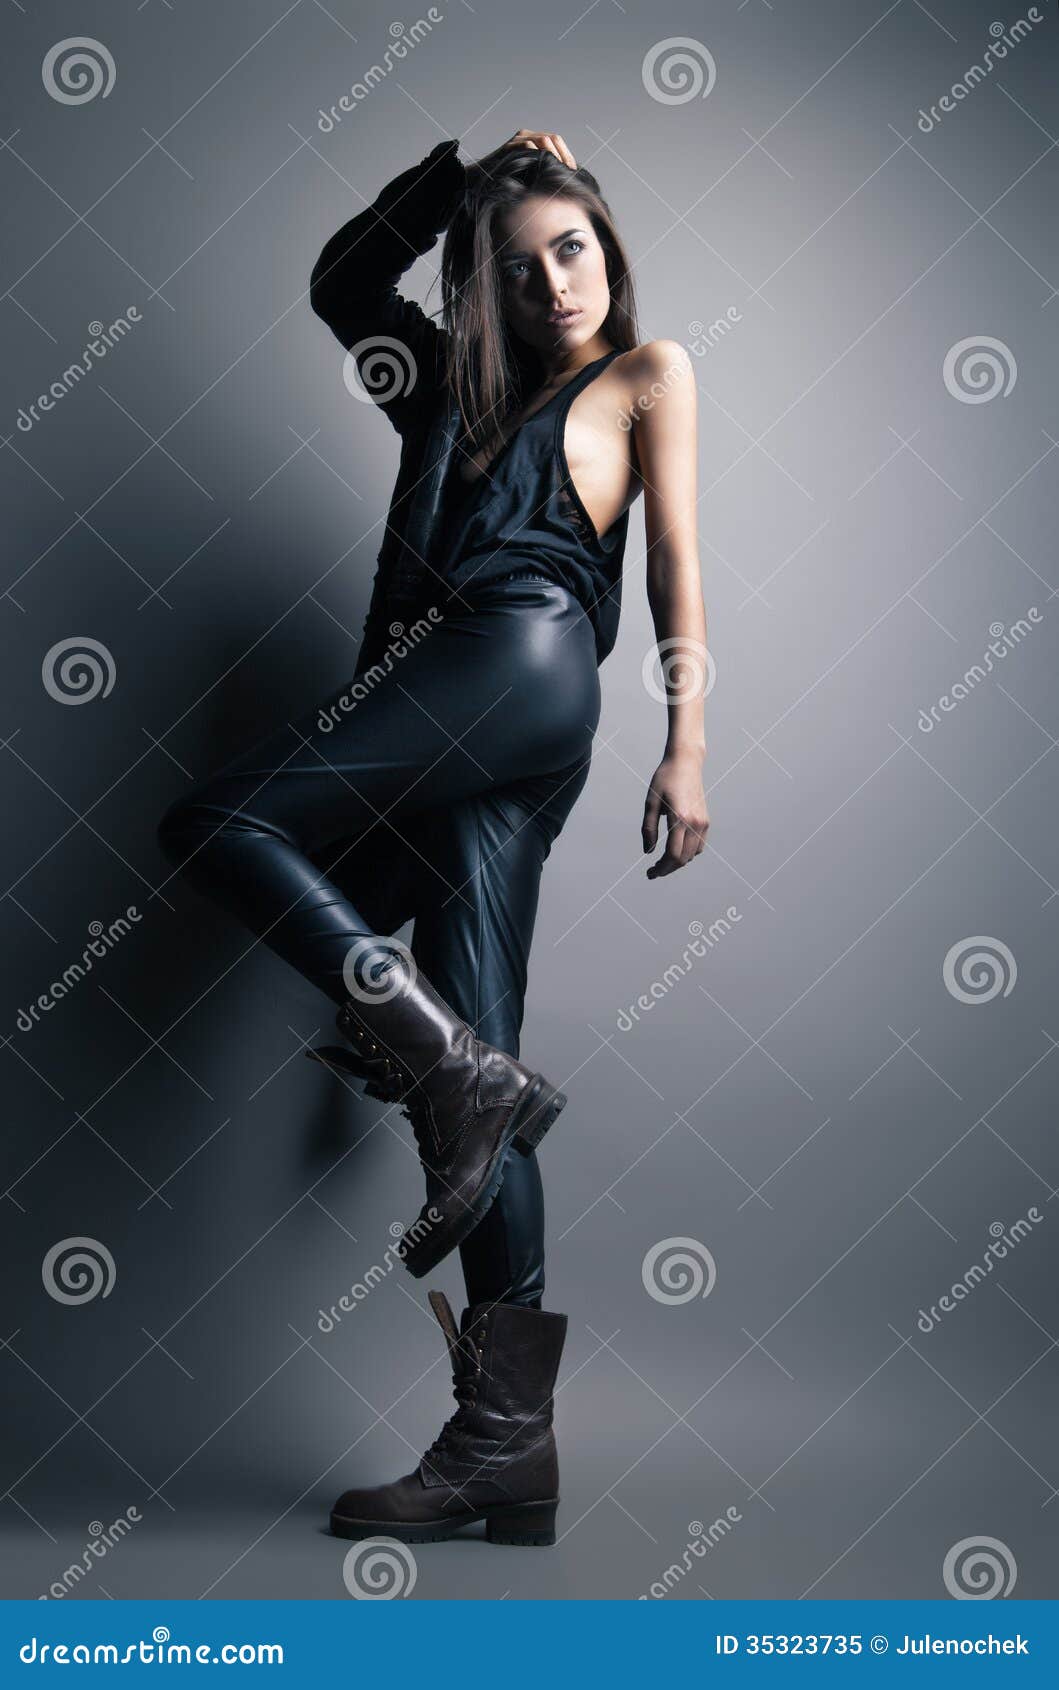 Fashion Model Wearing Leather Pants And Jacket Stock Image - Image of ...